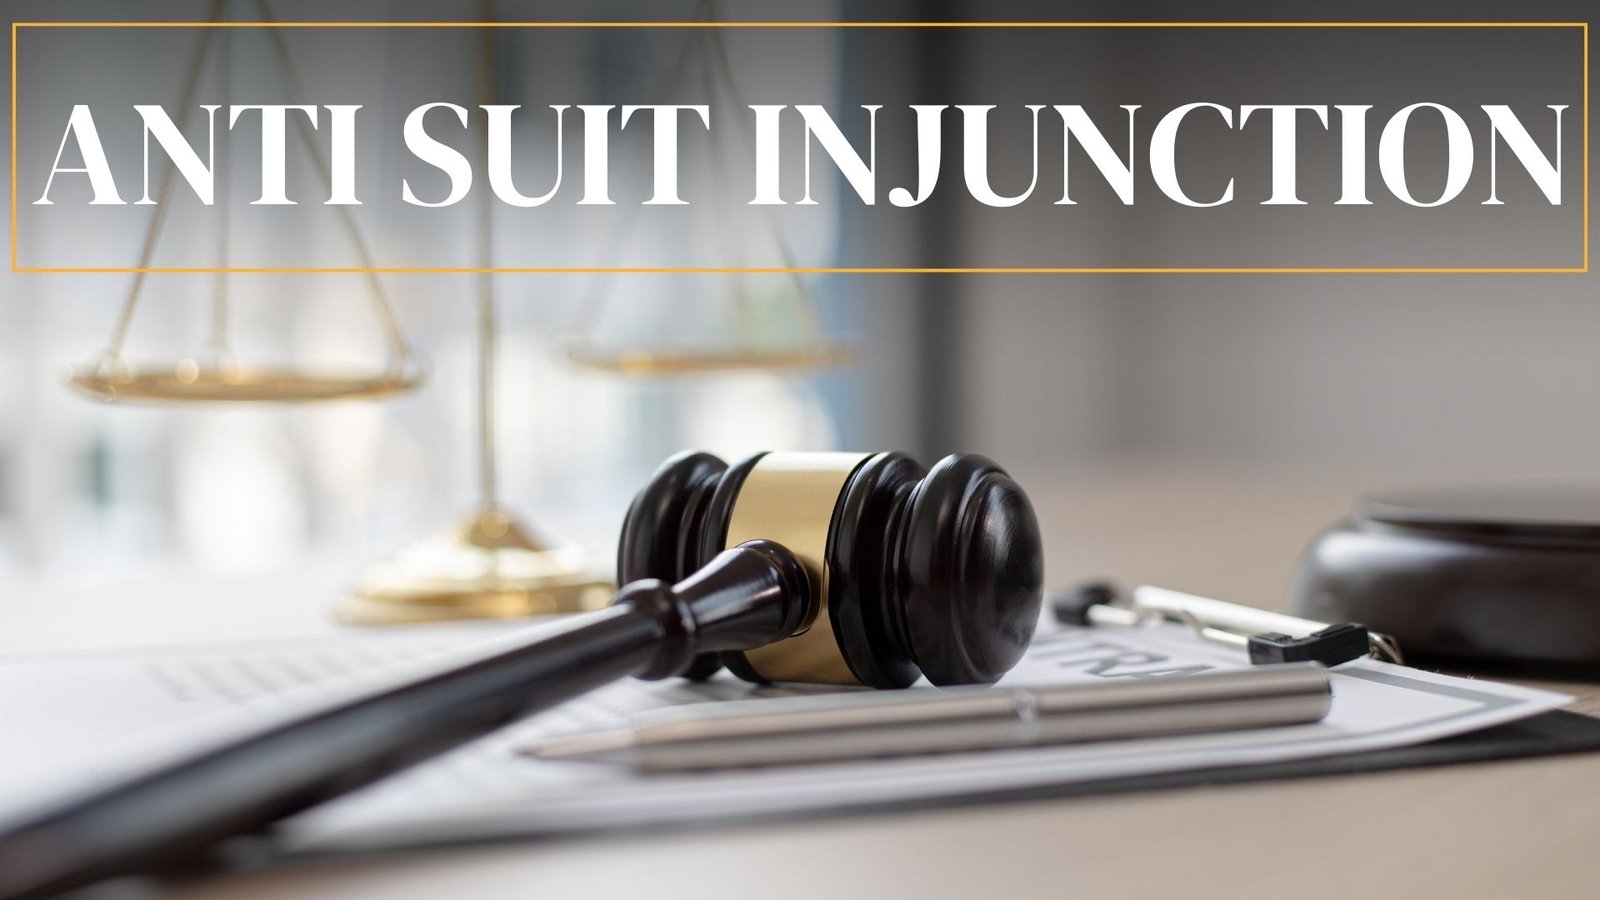 Anti Suit Injunction, Lawforeverything